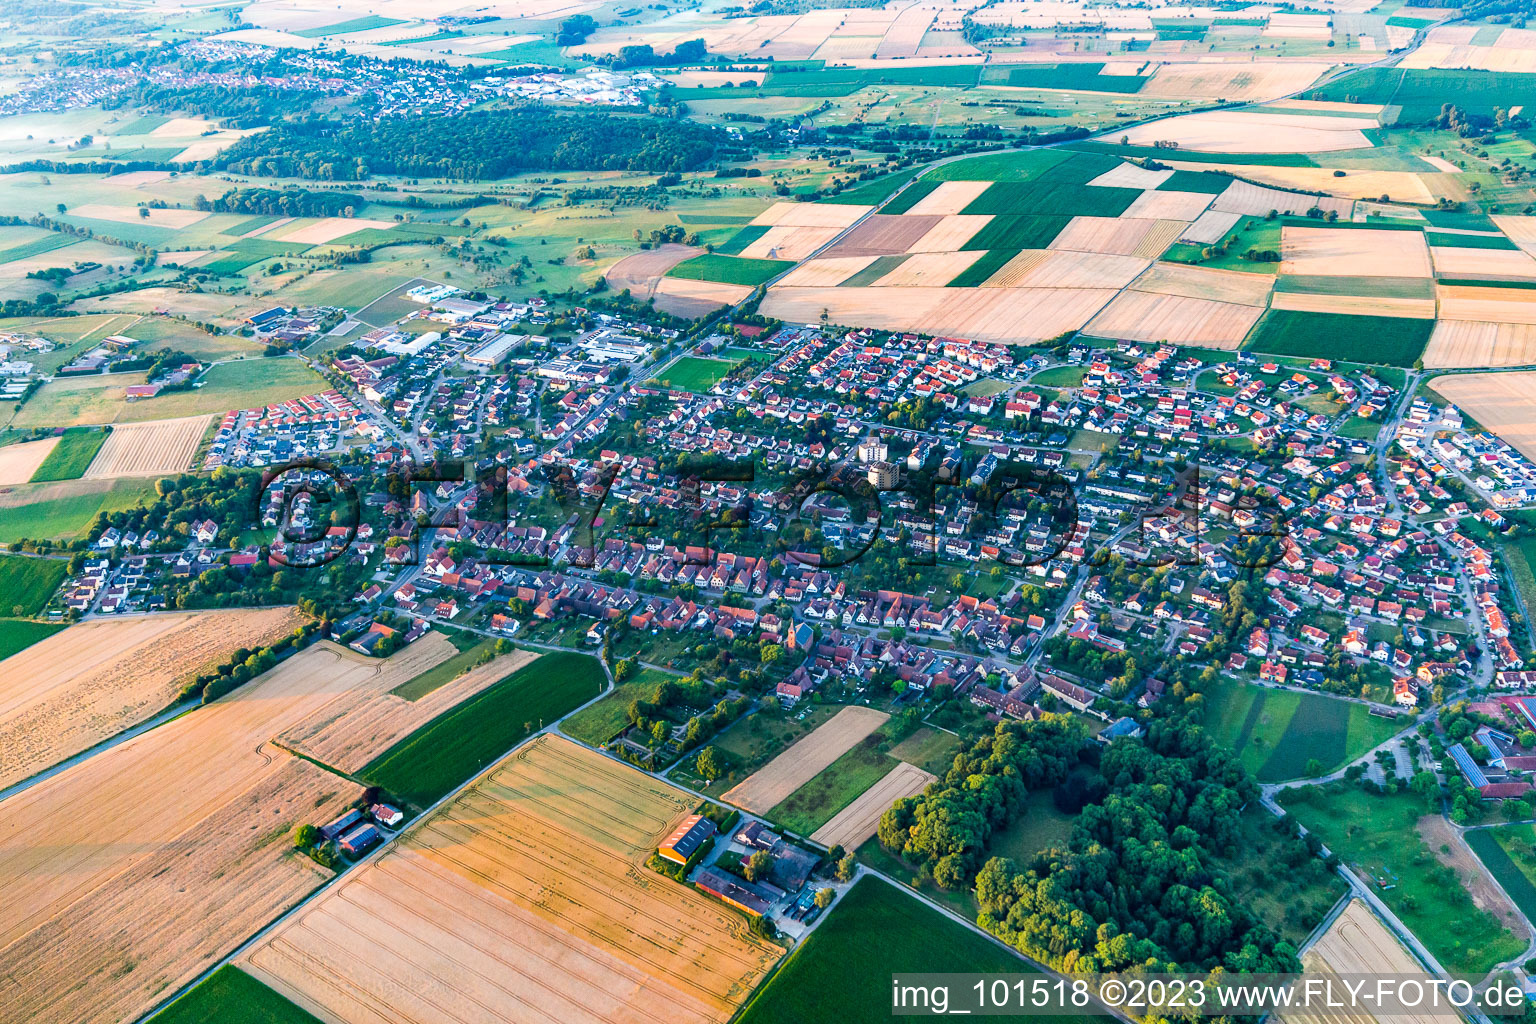 Vue aérienne de Quartier Bauschlott in Neulingen dans le département Bade-Wurtemberg, Allemagne